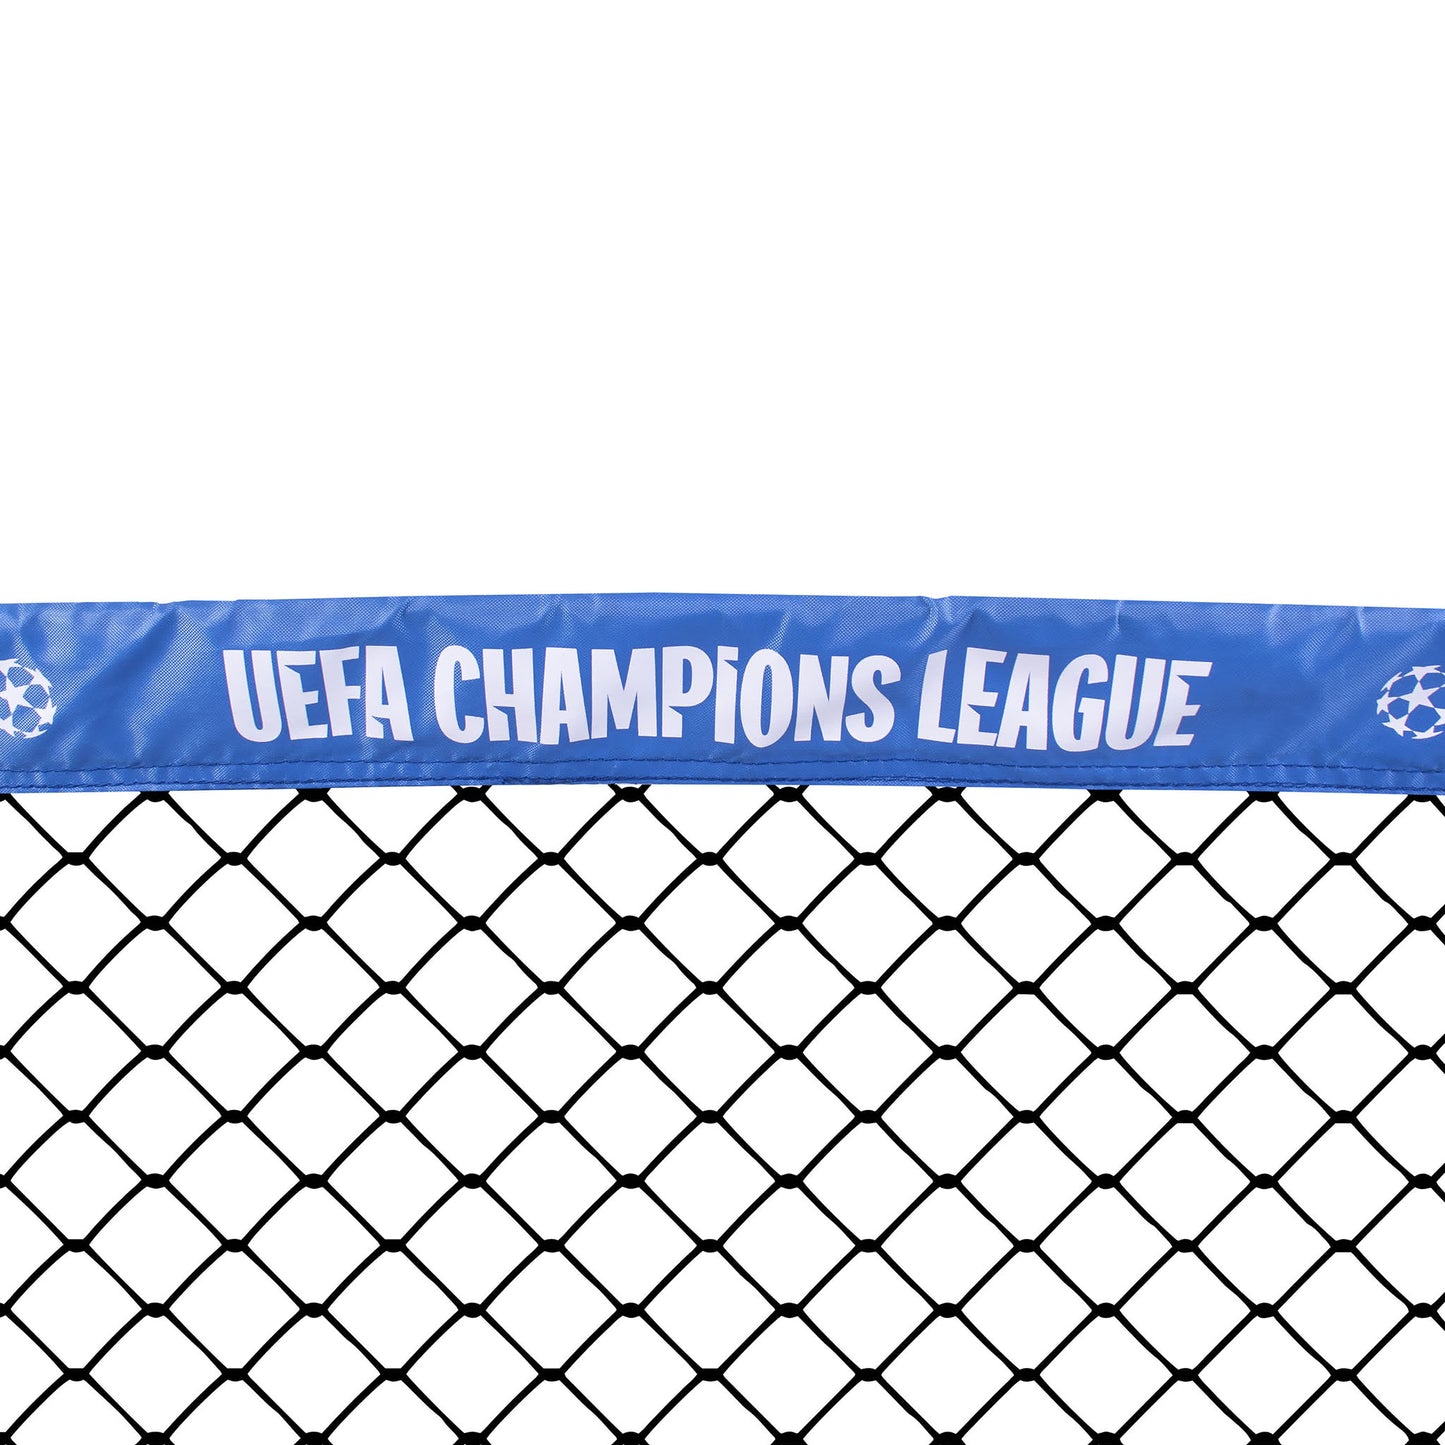 UEFA Champions League Flexi Goal